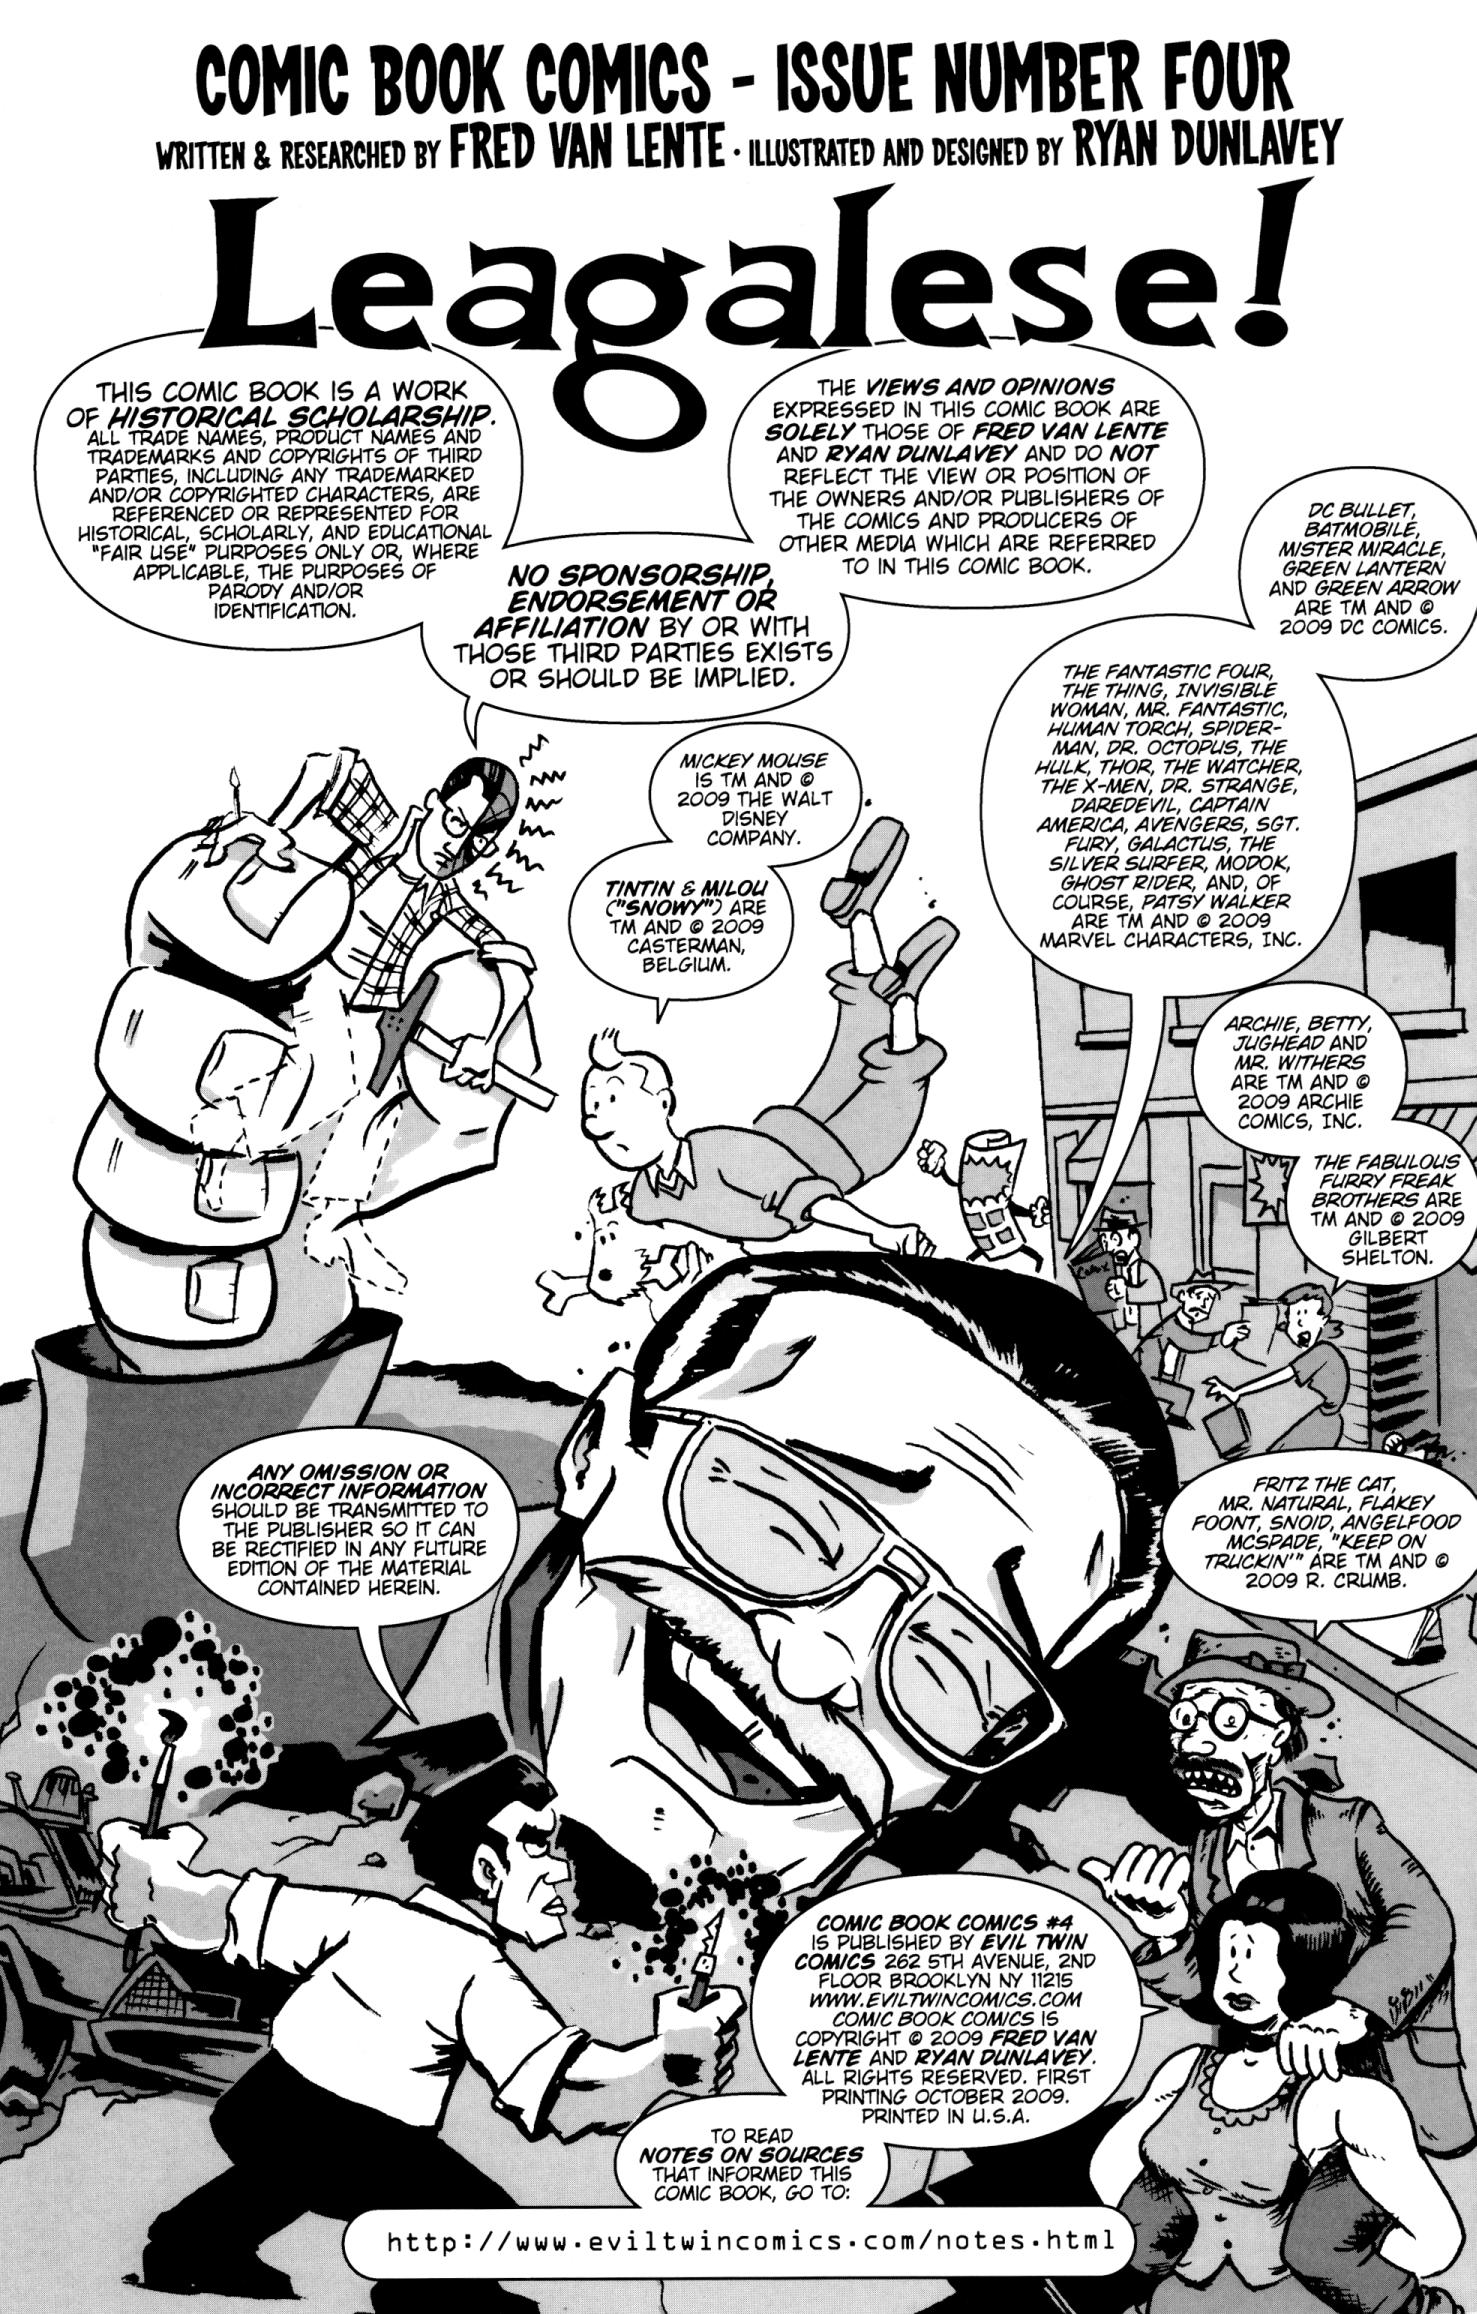 Read online Comic Book Comics comic -  Issue #4 - 2